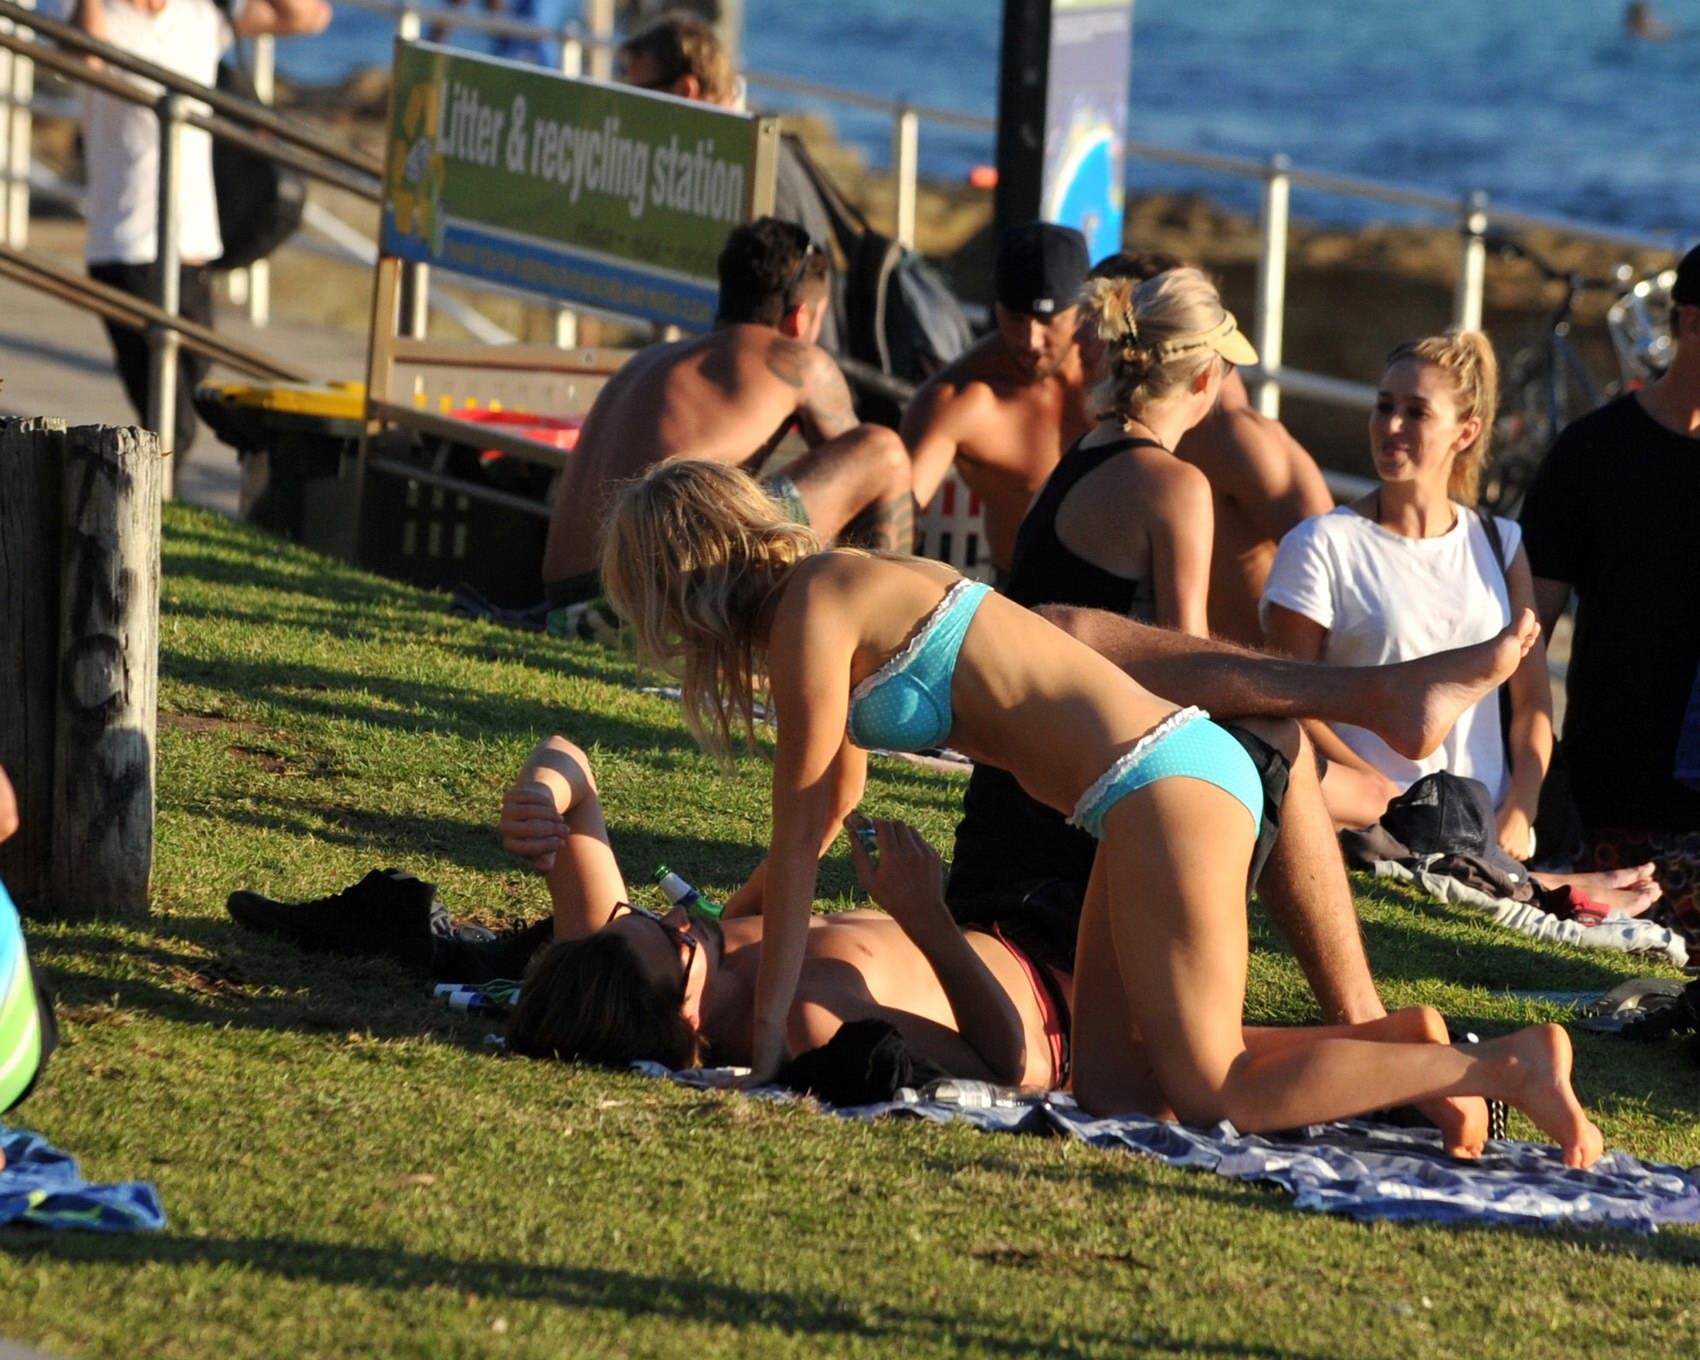 Samara Weaving in bikini petting with her boyfriend on Bondy Beach in Australia #75233761